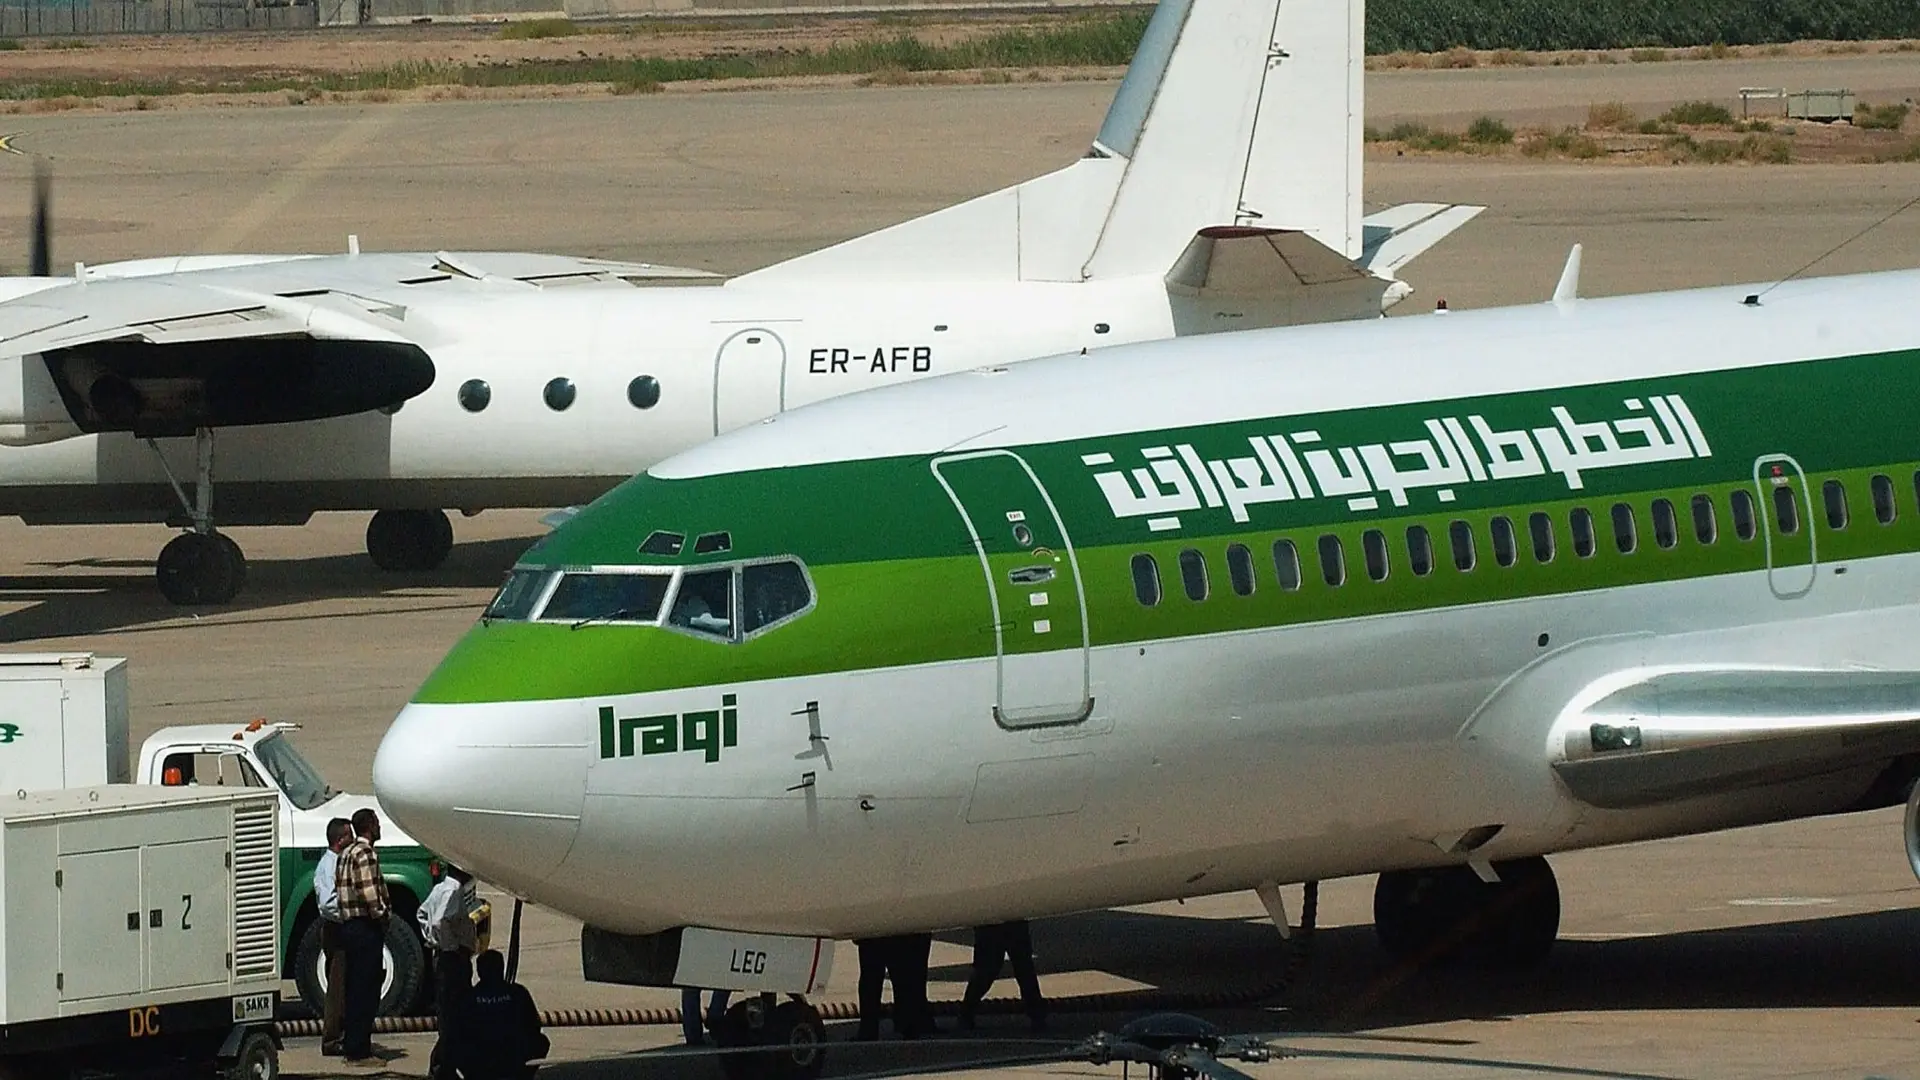  Iraqi Airways plane at an airport